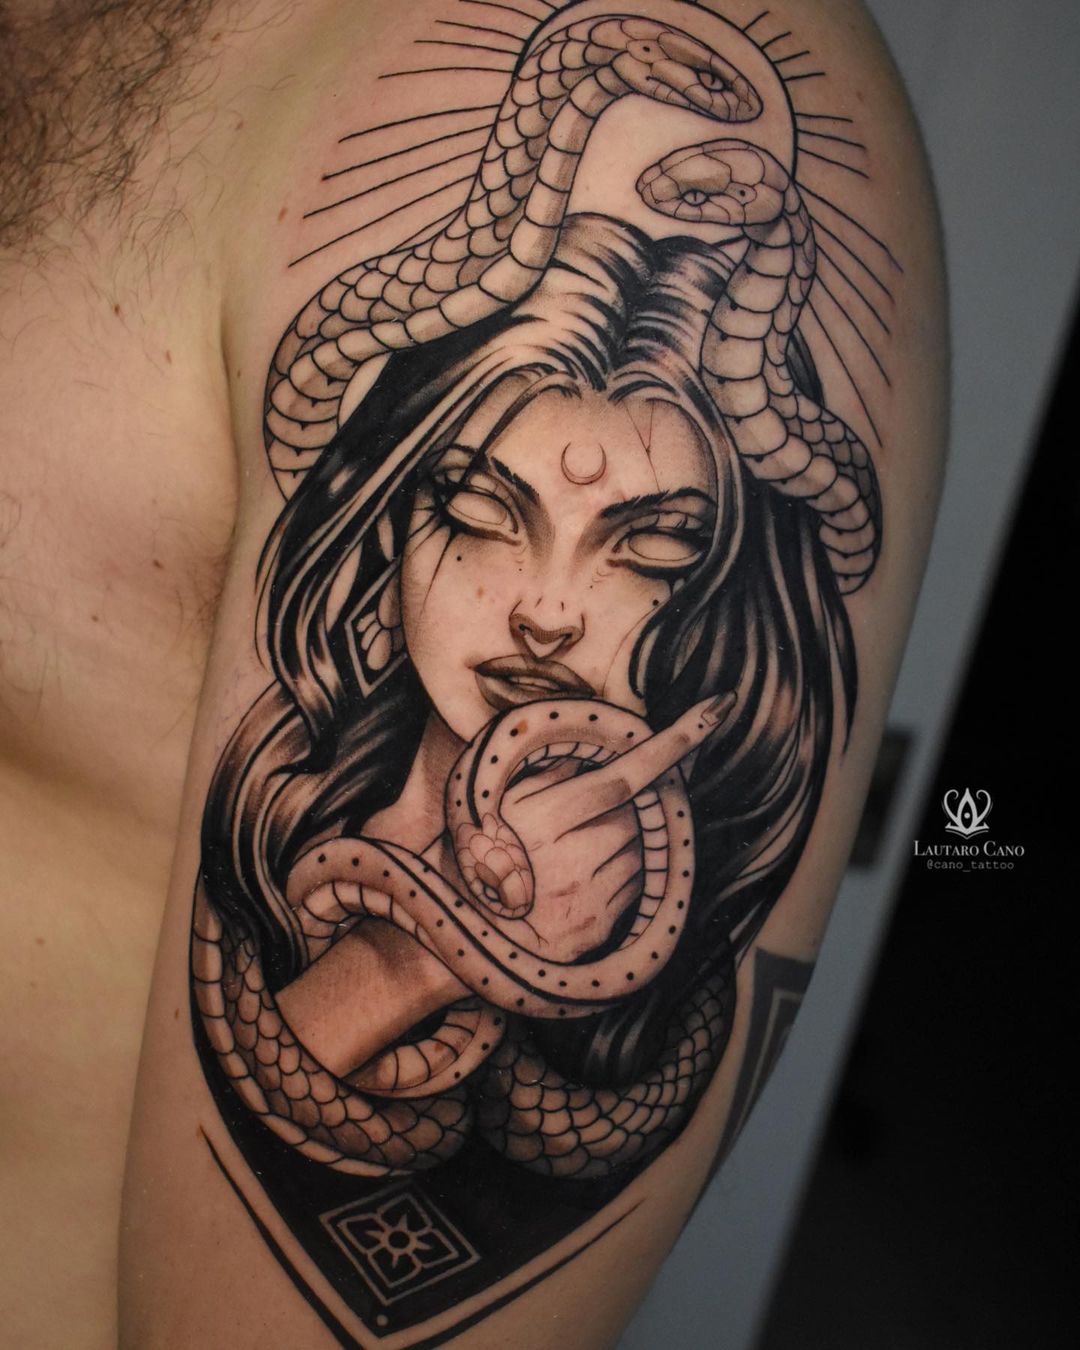 Arm inner tattoos designs white snake tattoo with roses tattoo ideas   Inspirational tattoos Tattoos Line tattoos